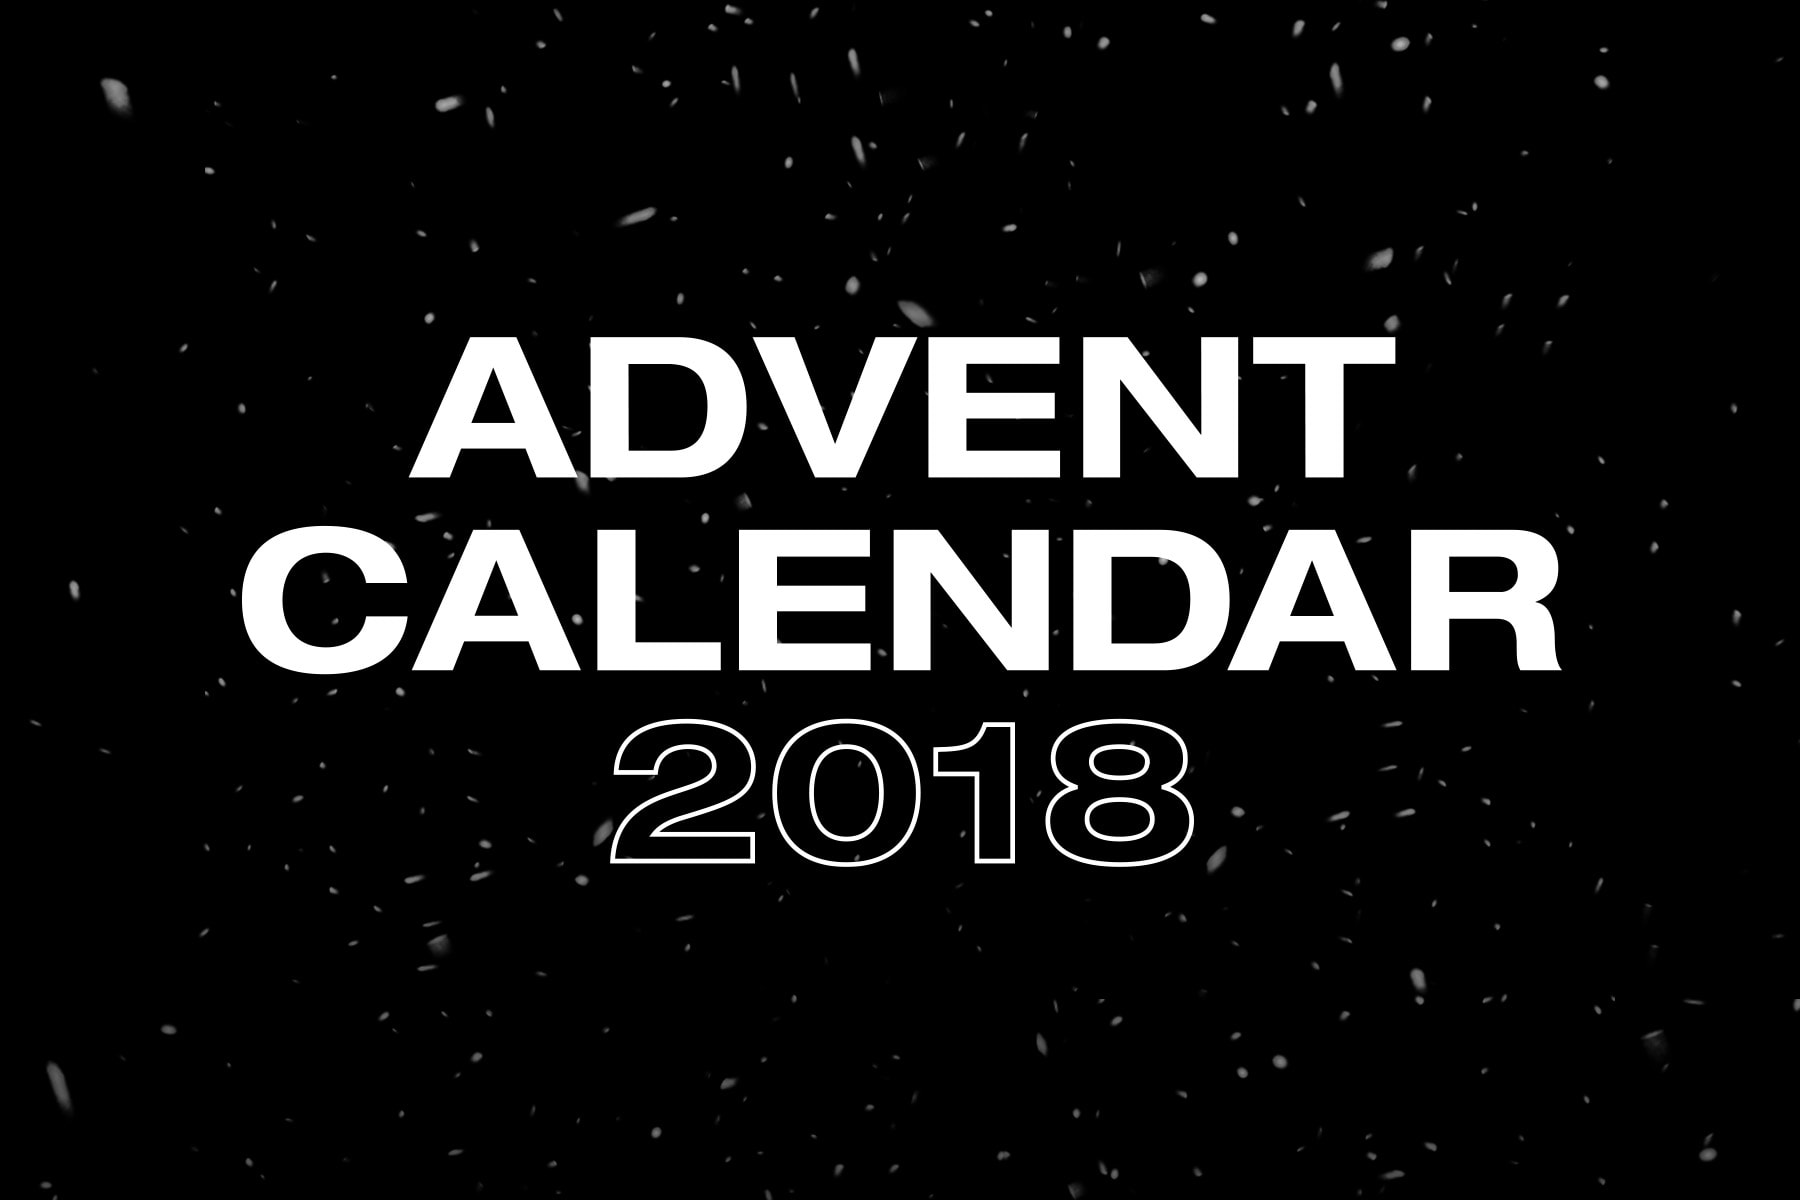 Advent Calendar 2018: Official Prize Winners